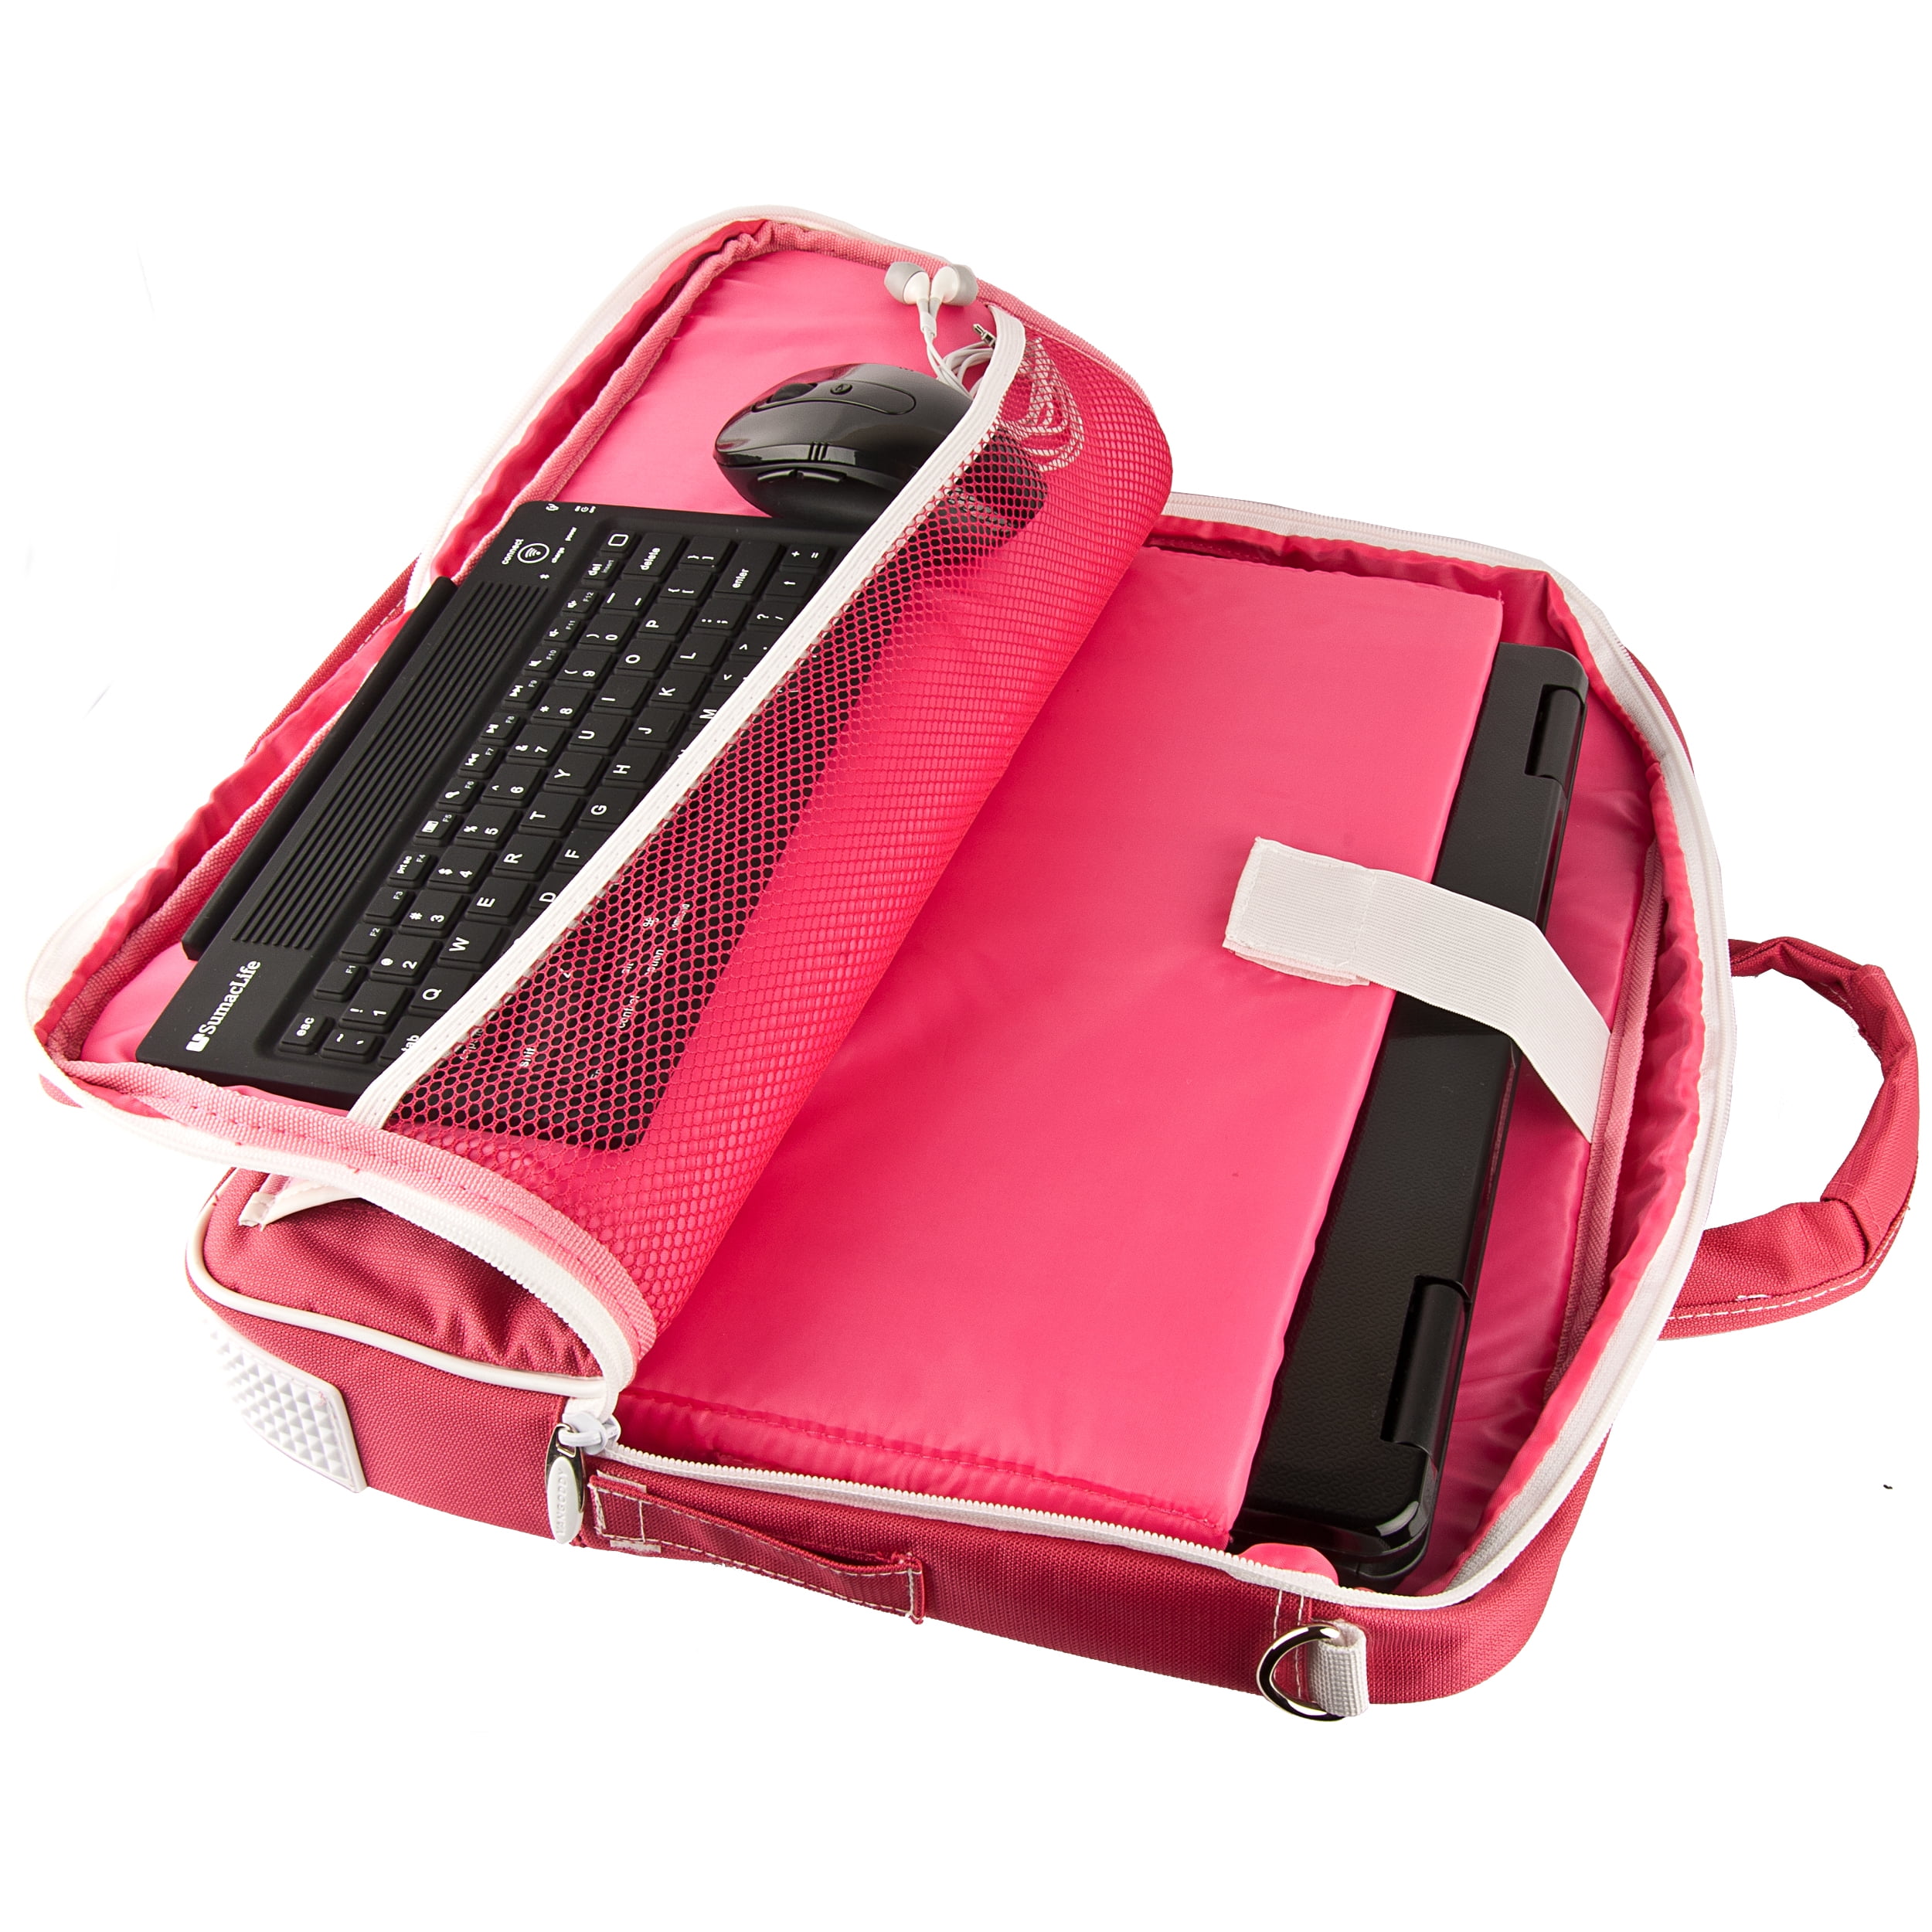 SPATEXE men & women brown laptop messenger bag for office  formal casual ( brown 30L ) Waterproof Messenger Bag - Messenger Bag